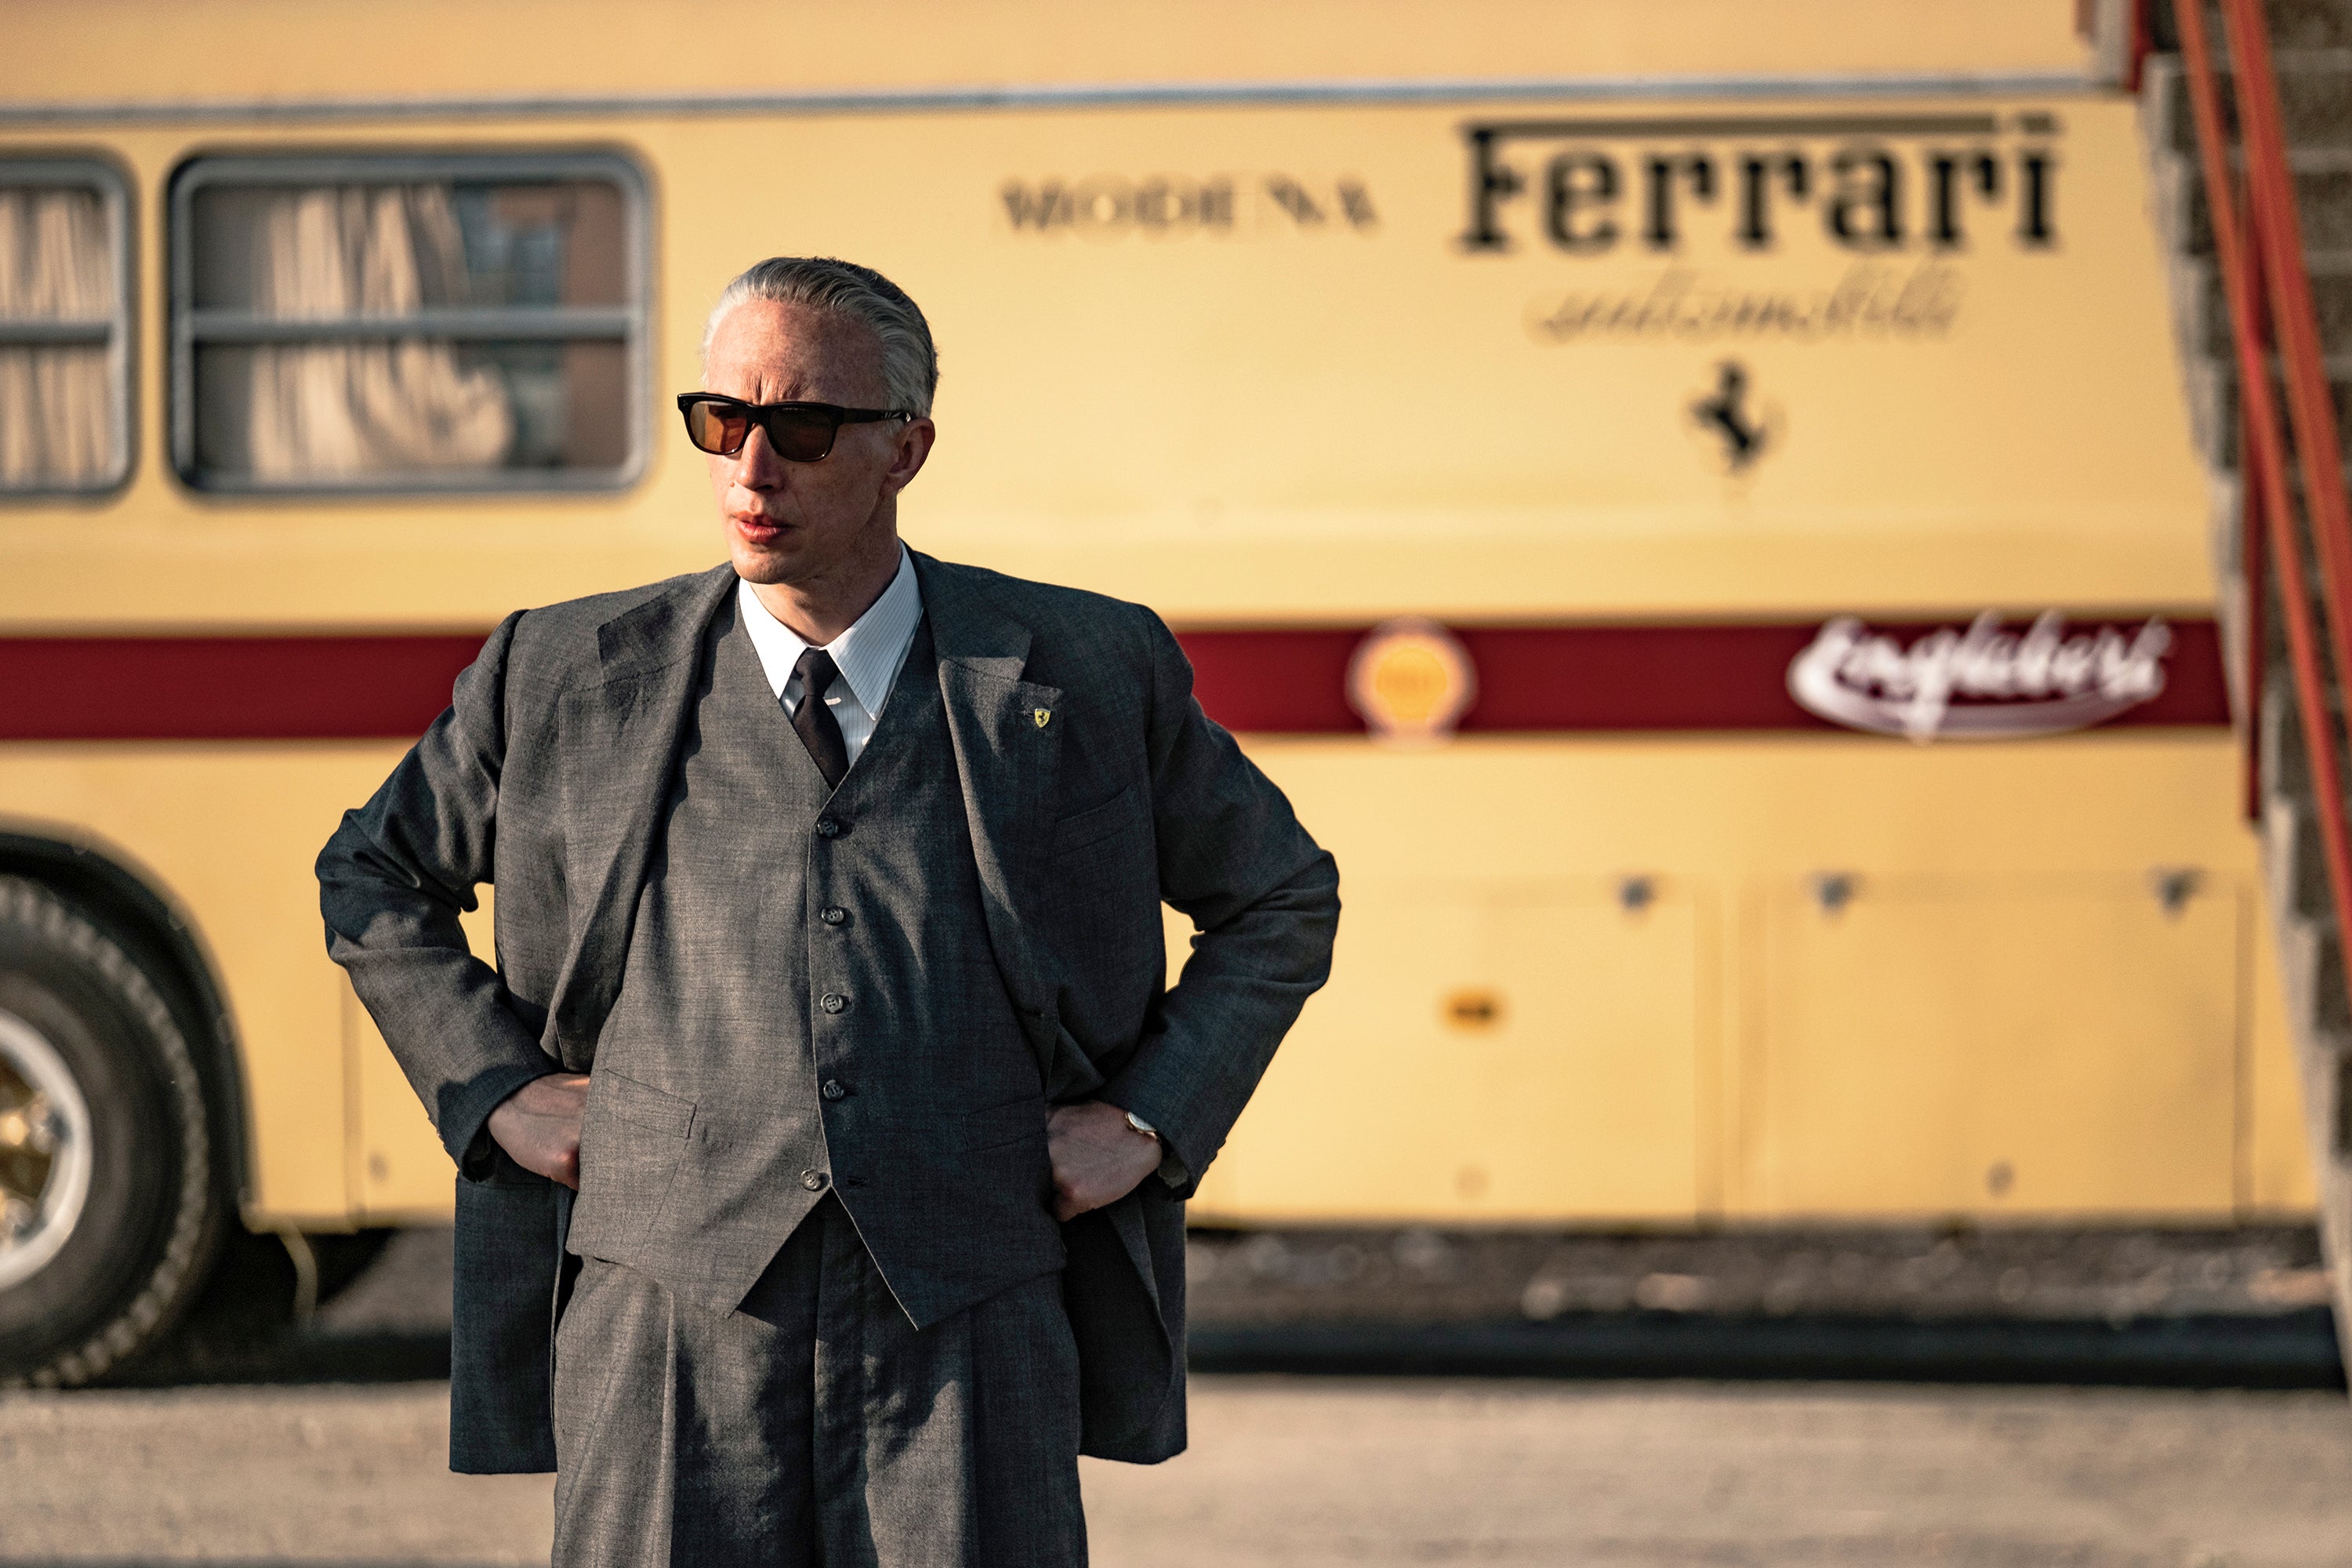 Driver plays Italian race car driver Enzo Ferrari in the new Michael Mann biopic